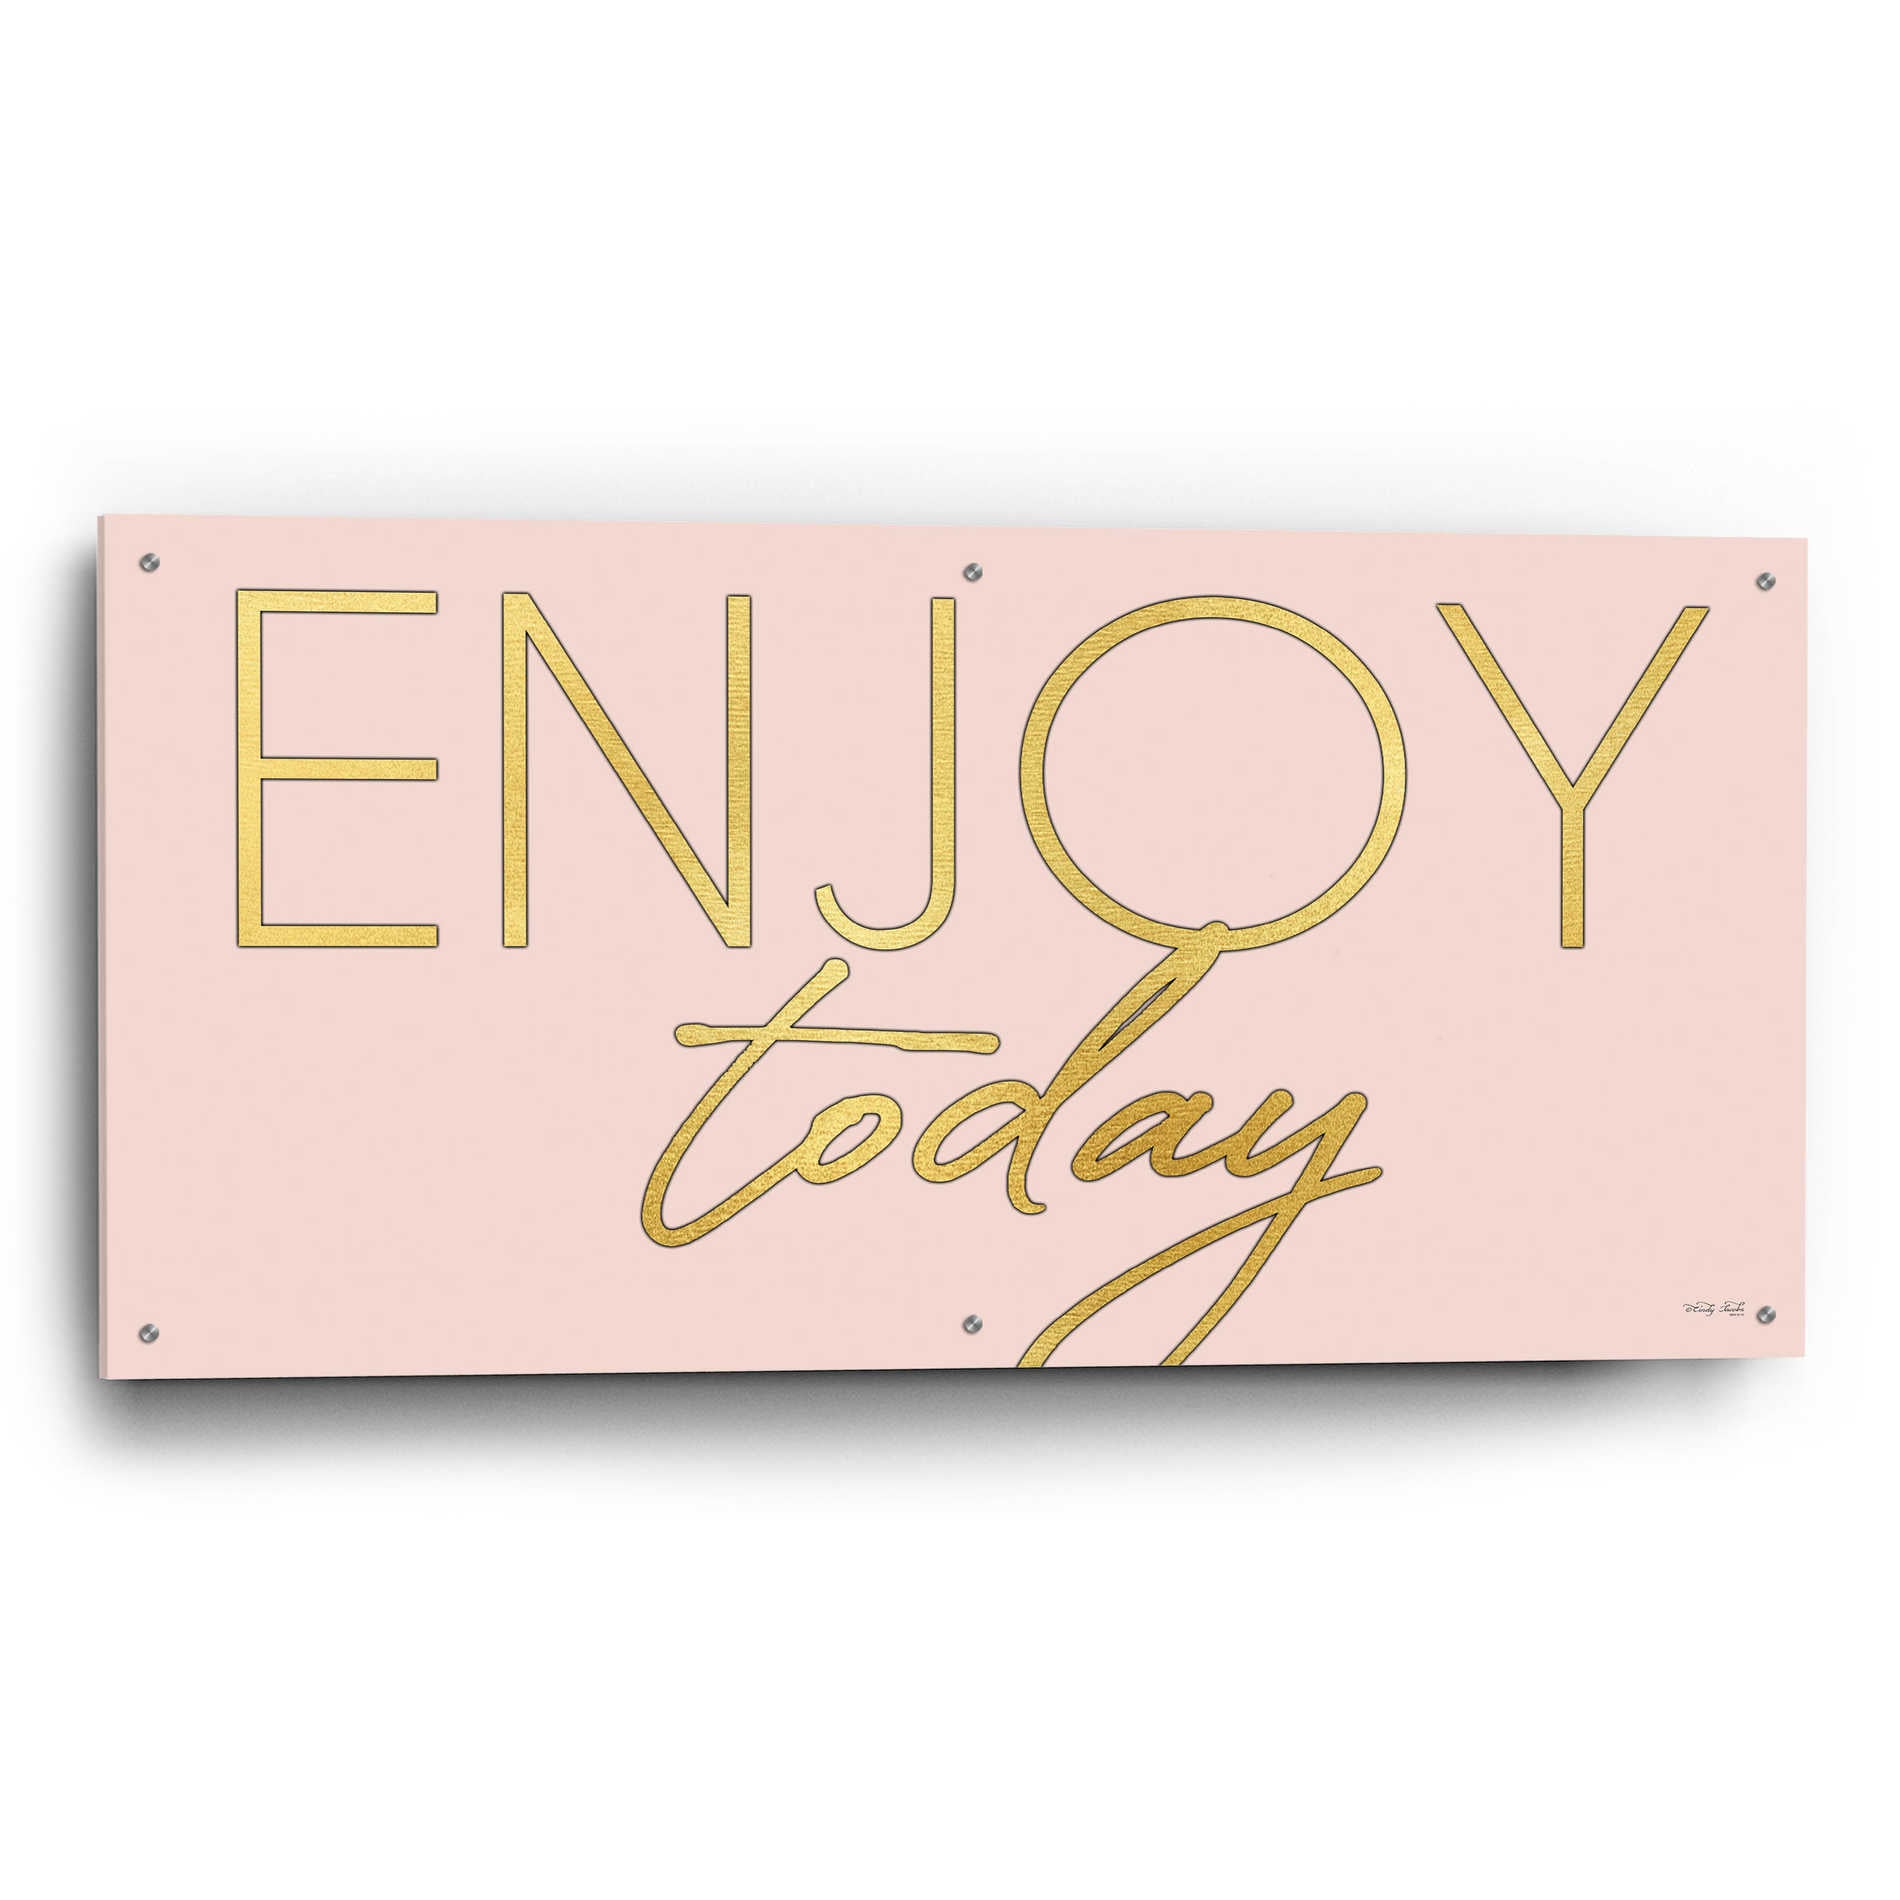 Epic Art 'Enjoy Today' by Cindy Jacobs, Acrylic Glass Wall Art,48x24